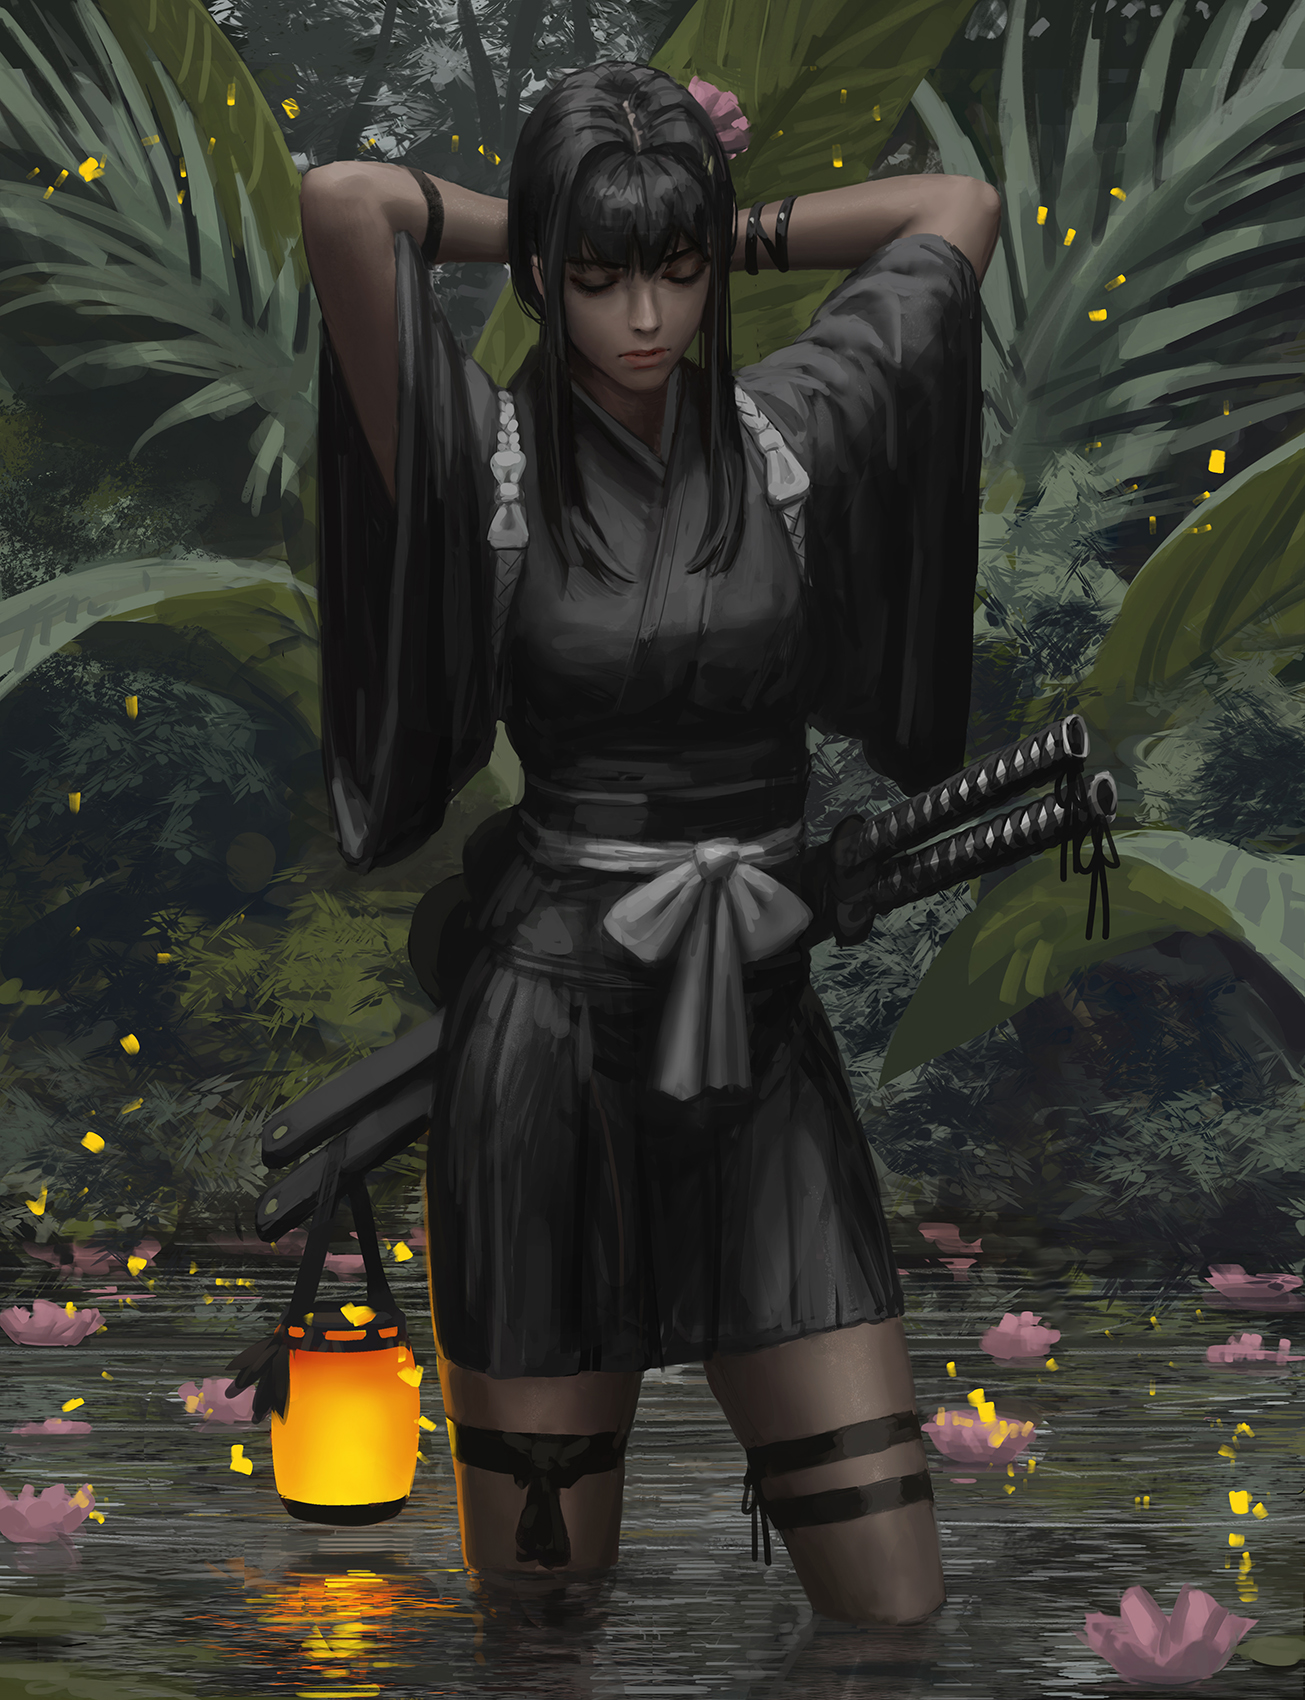 General 1305x1700 GUWEIZ digital art artwork digital painting katana women leaves water lantern arms up black clothing